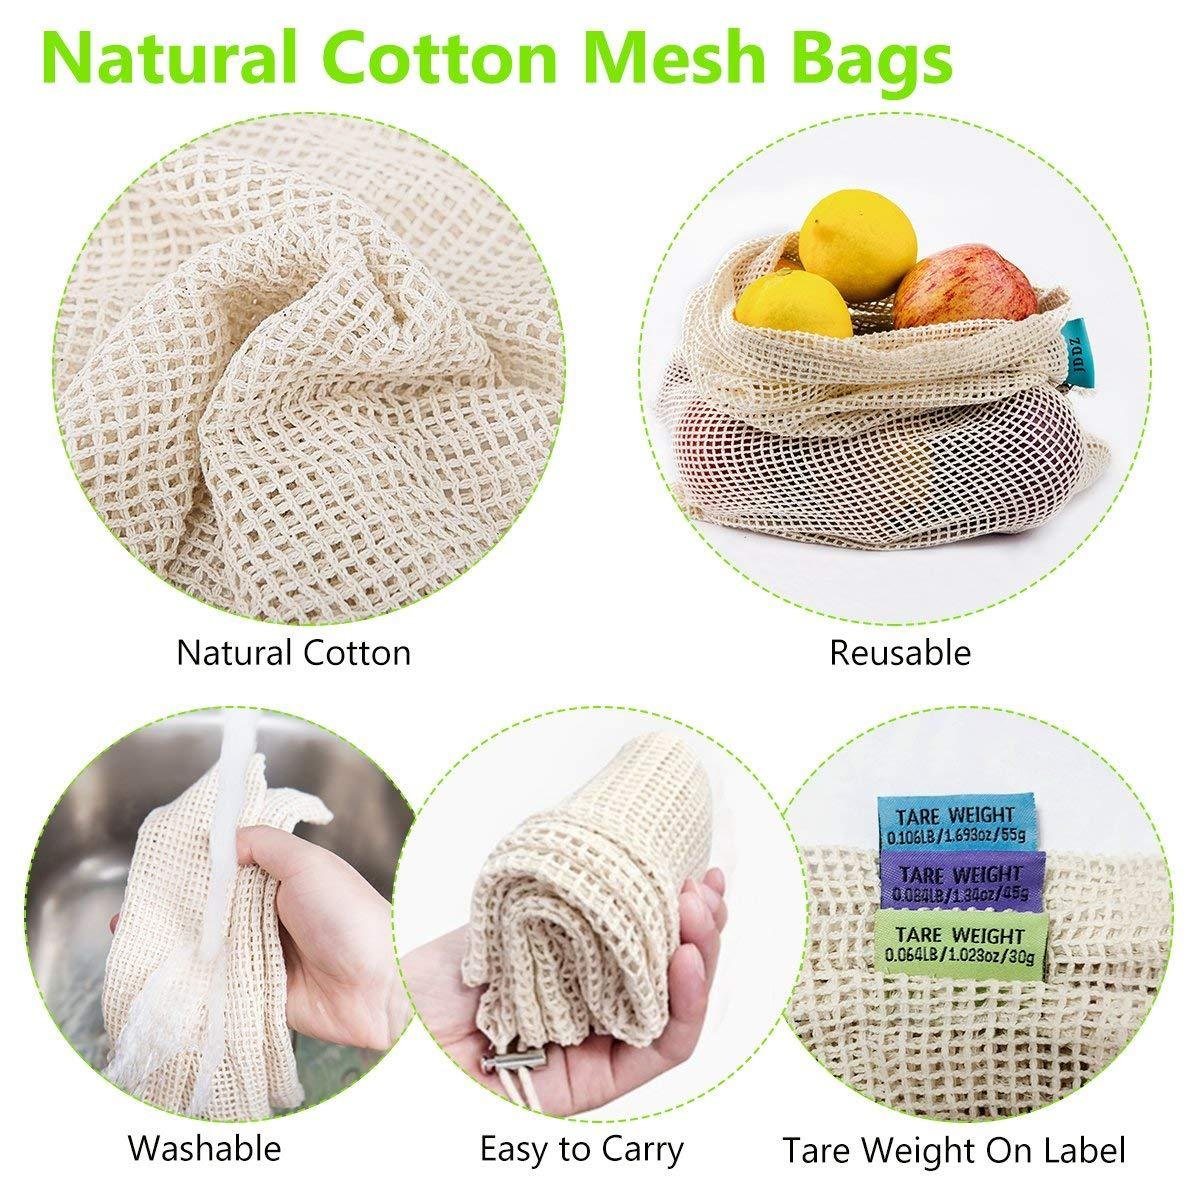 Reusable Mesh Produce Bags, Zero Waste Eco-Friendly Natural & Healthy bags 3